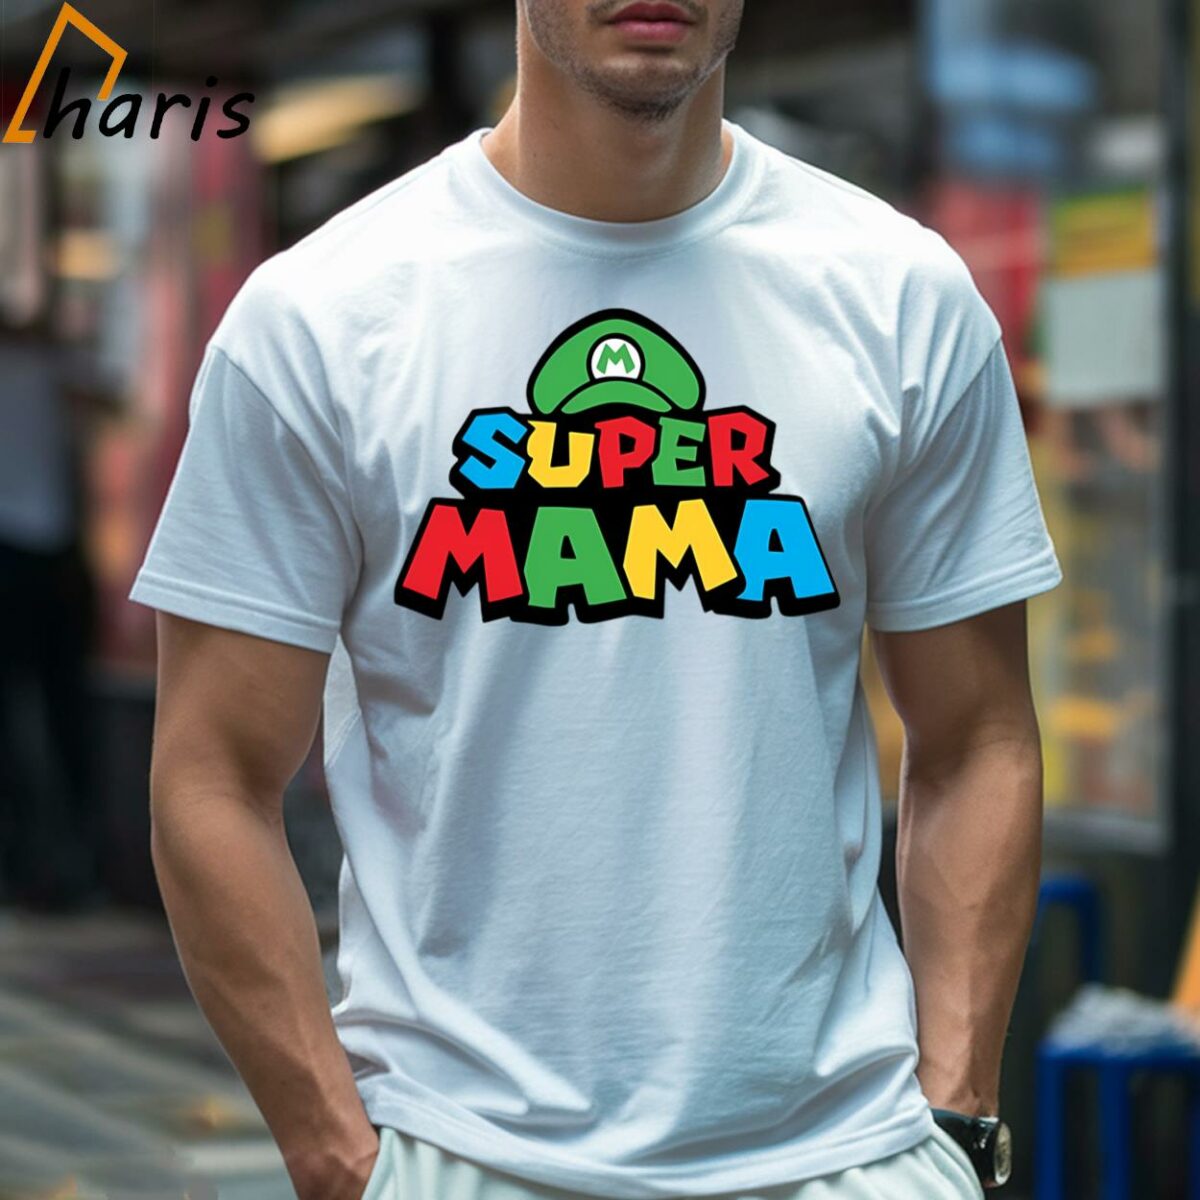 Super Mama Super Mario Parody Green Shirt 2 T shirt